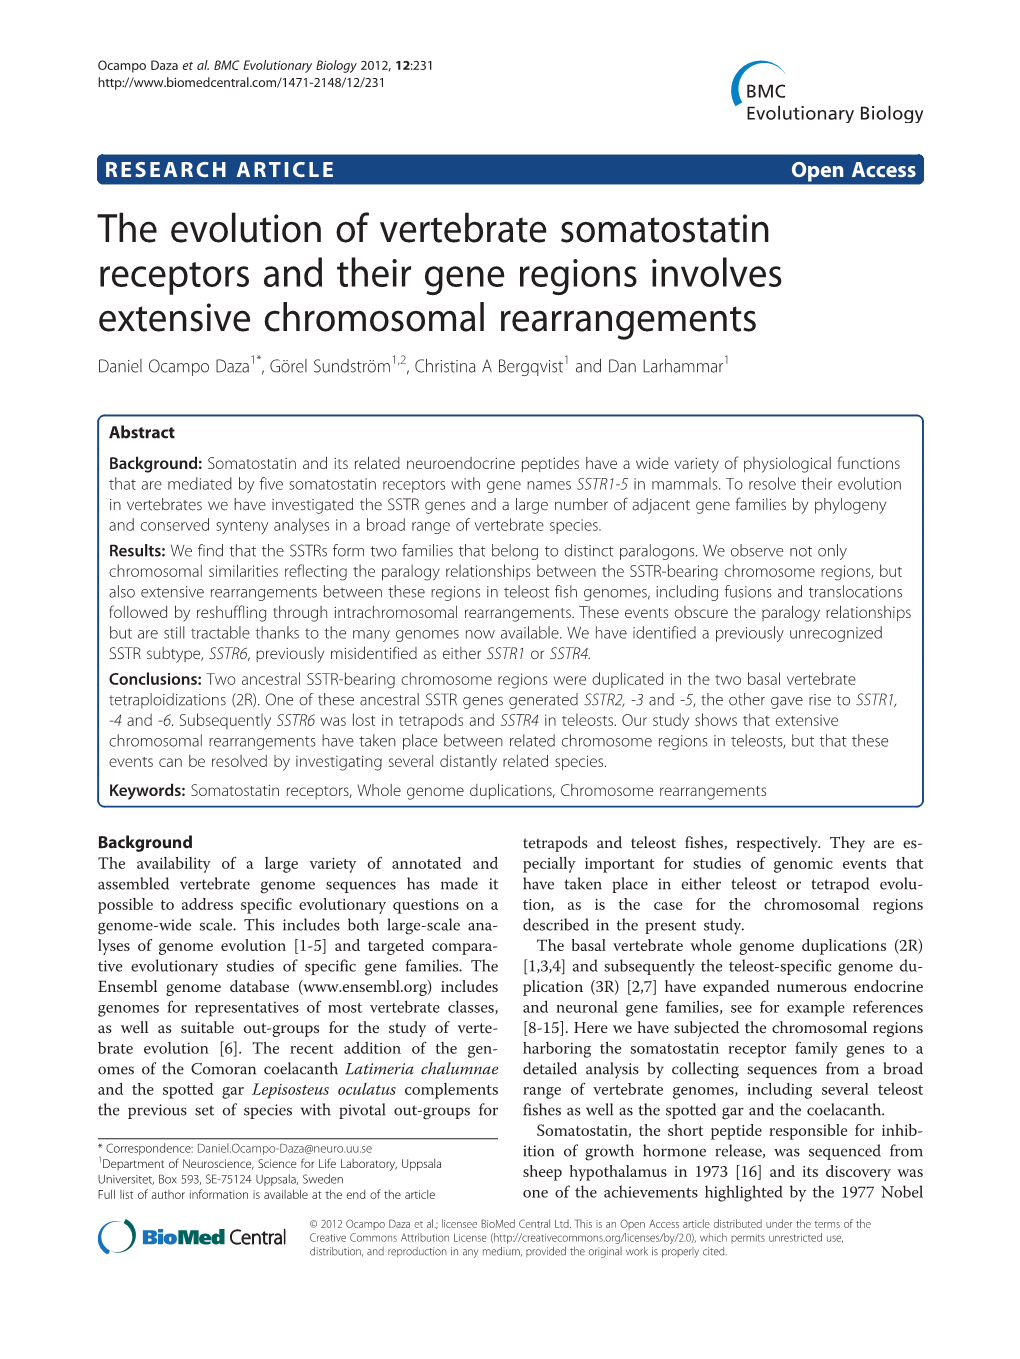 The Evolution of Vertebrate Somatostatin Receptors and Their